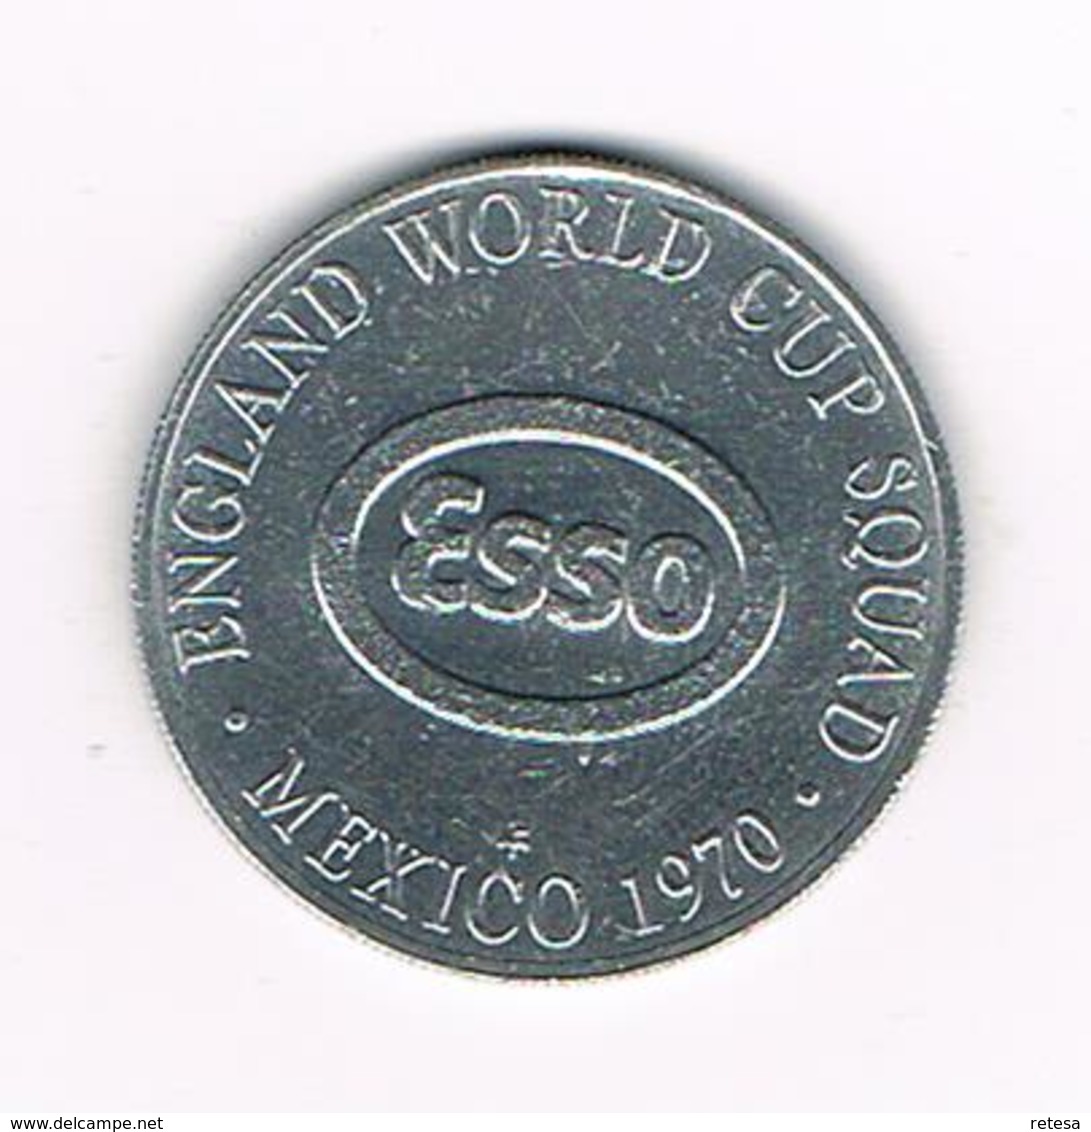 //  TOKEN  COLIN BELL  ENGLAND WORLD CUP  SQUAD  MEXICO  1970 ESSO - Pièces écrasées (Elongated Coins)